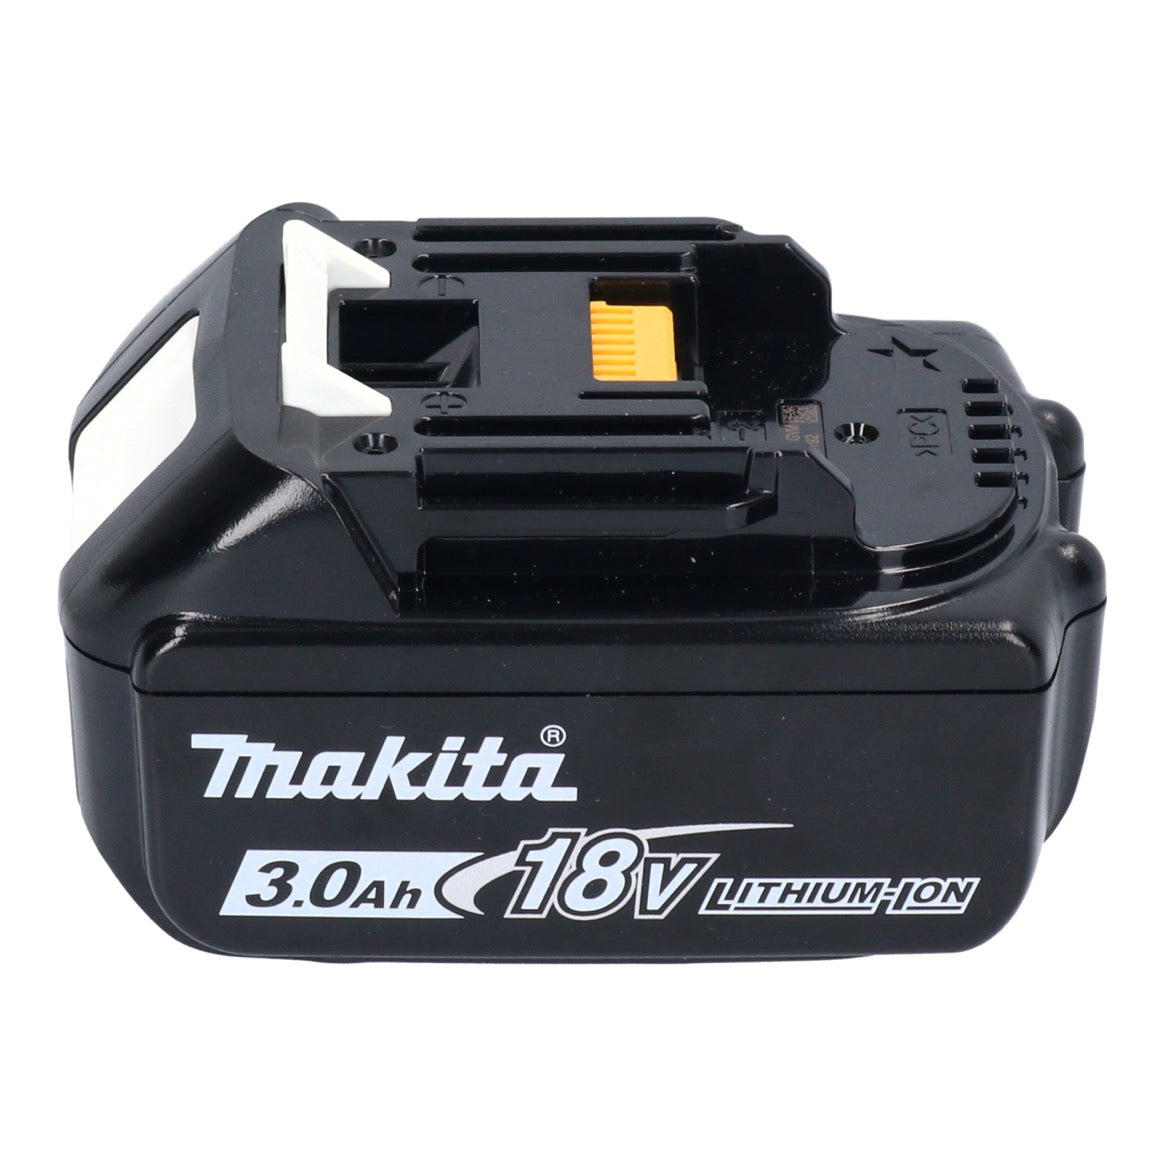 Makita DTD 172 F1 Akku Schlagschrauber 18 V 180 Nm 1/4" Brushless + 1x Akku 3,0 Ah - ohne Ladegerät